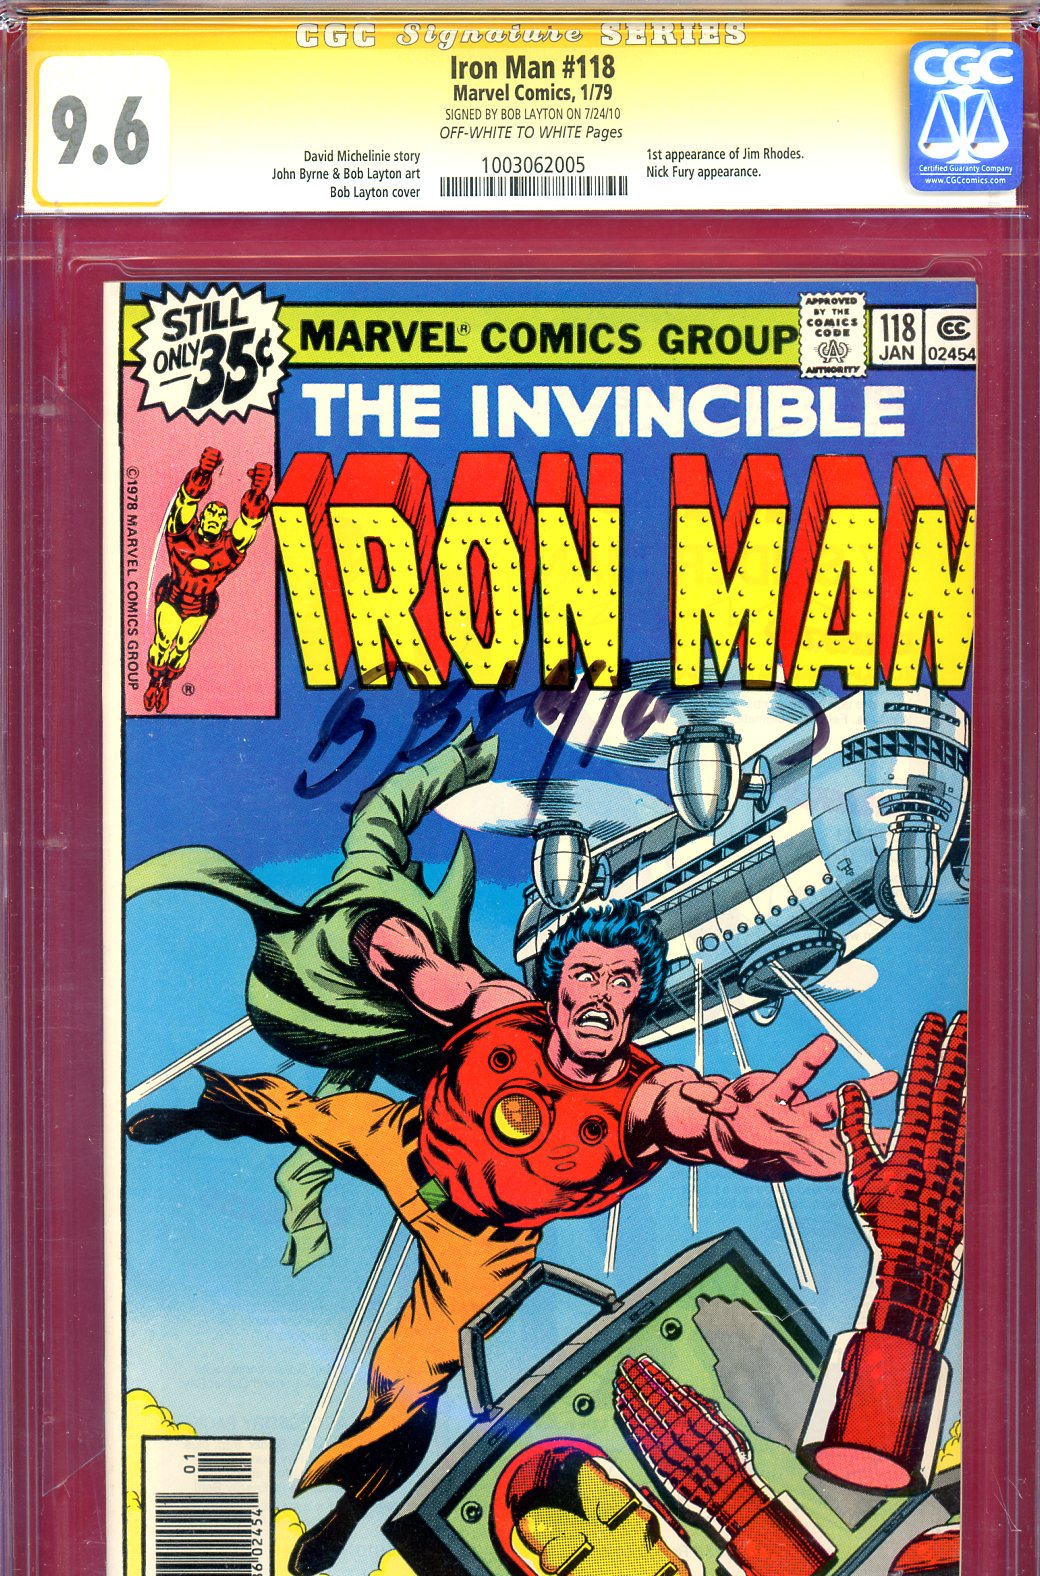 Iron Man #118 CGC 9.6 ow/w CGC Signature SERIES